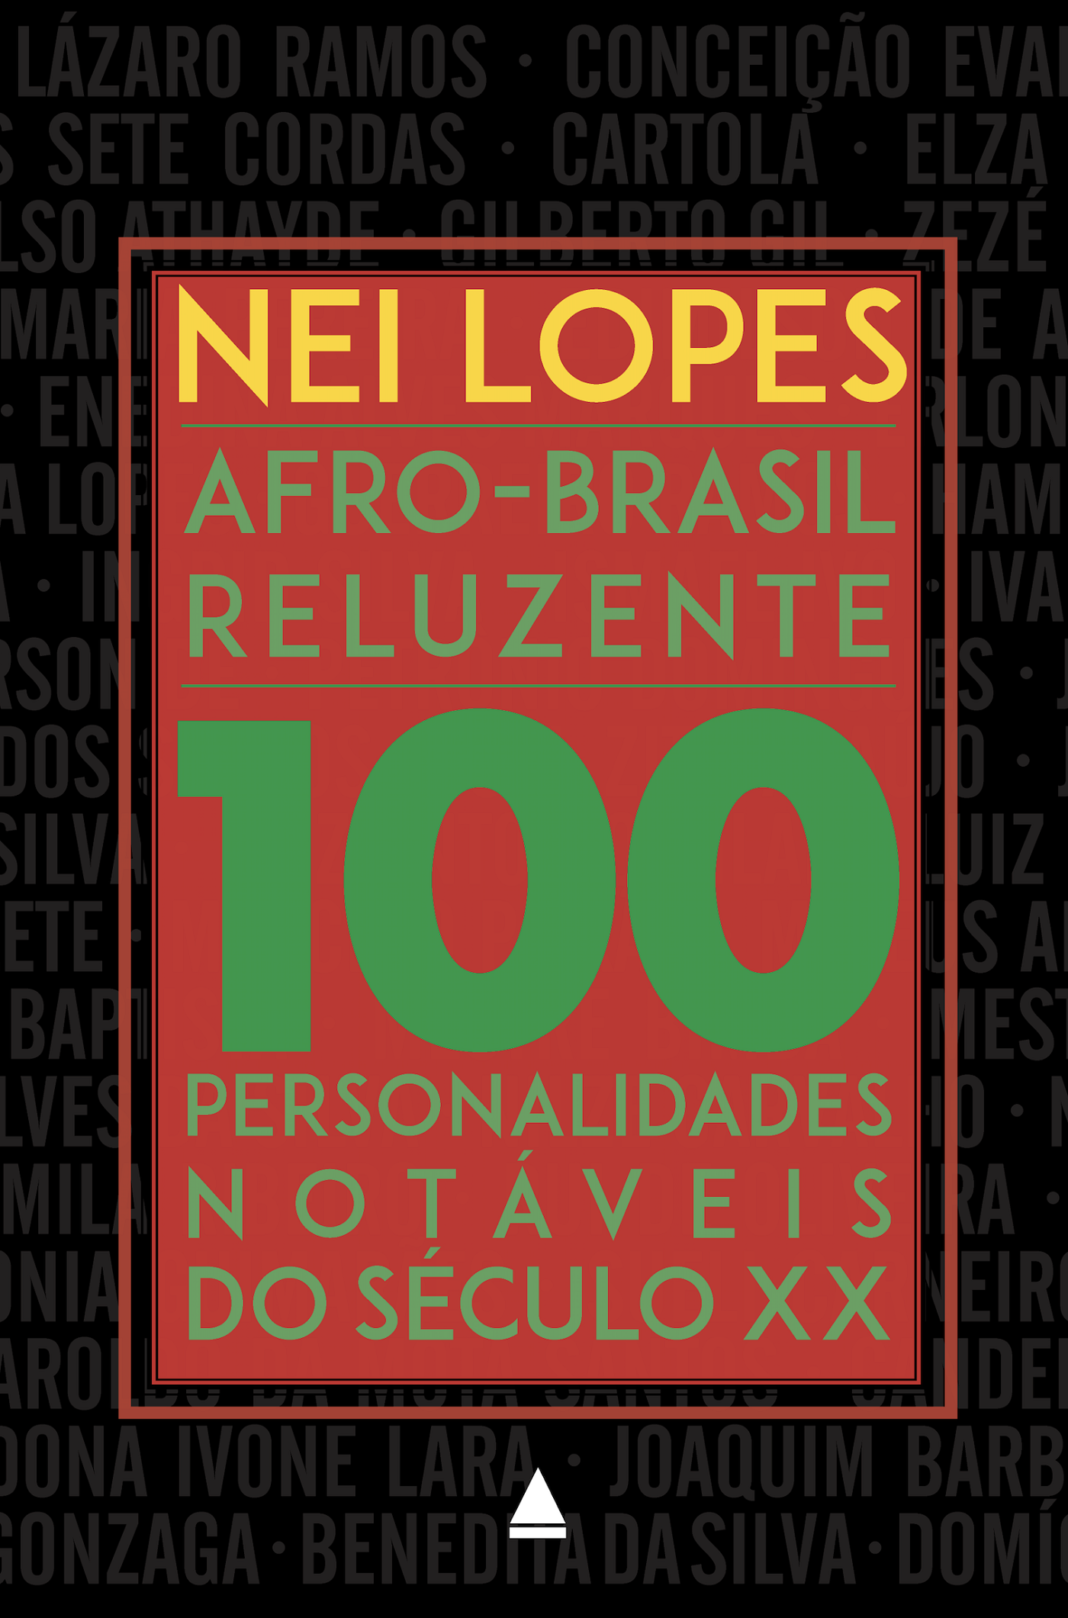 Afro-Brasil Reluzente - 100 Personalidades Notáveis do Século XX. De Nei Lopes.